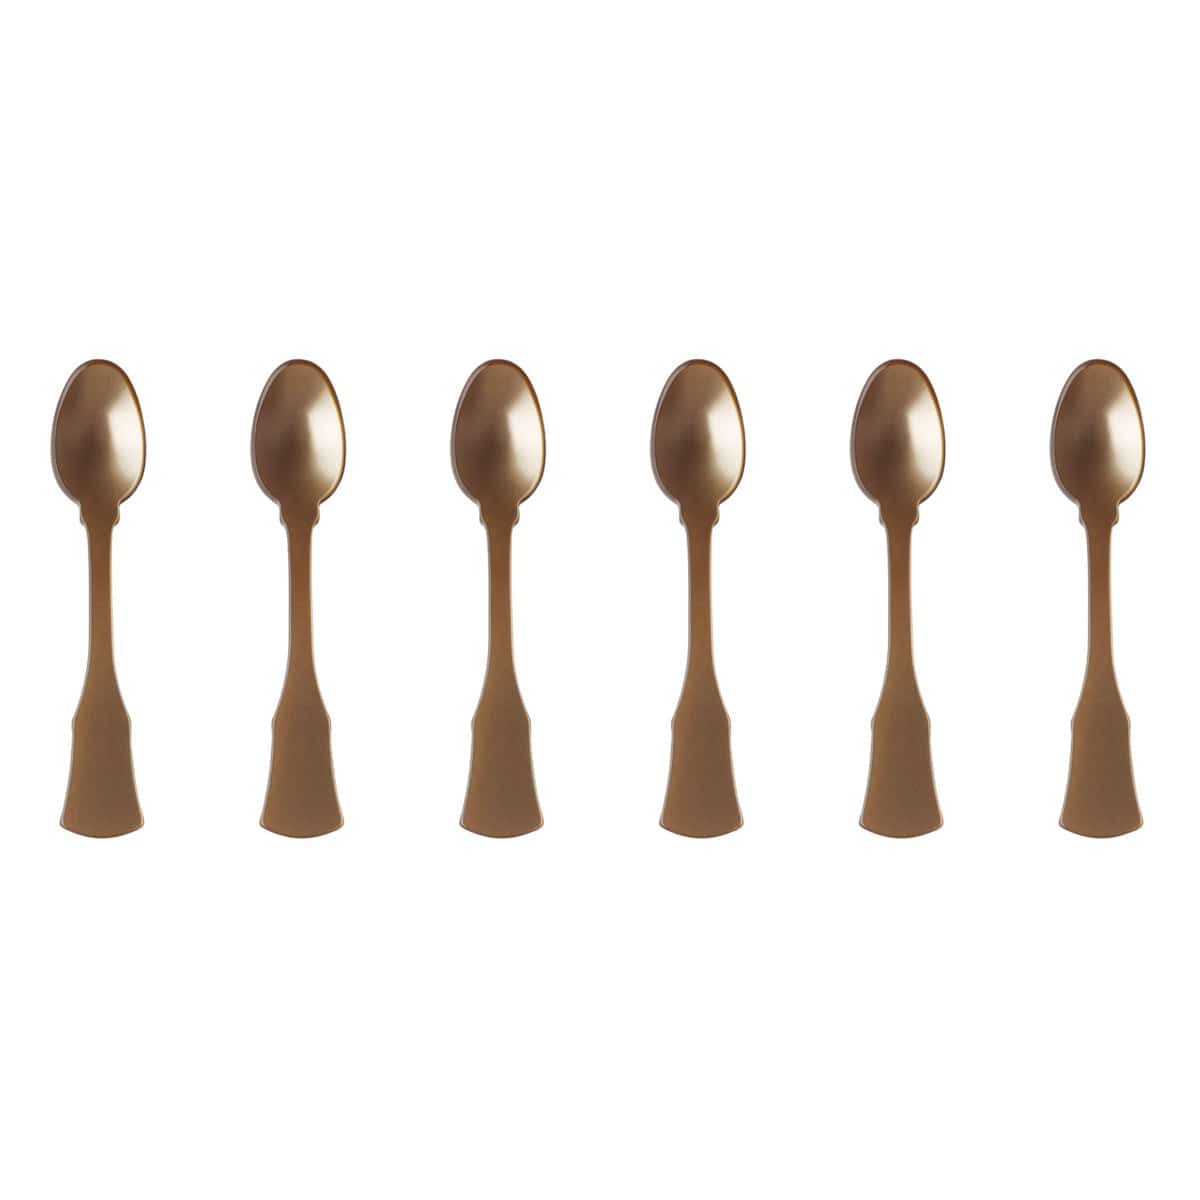 Sabre Honorine 6-Piece Demi-Tasse Spoon Set, Caramel - Kitchen Universe